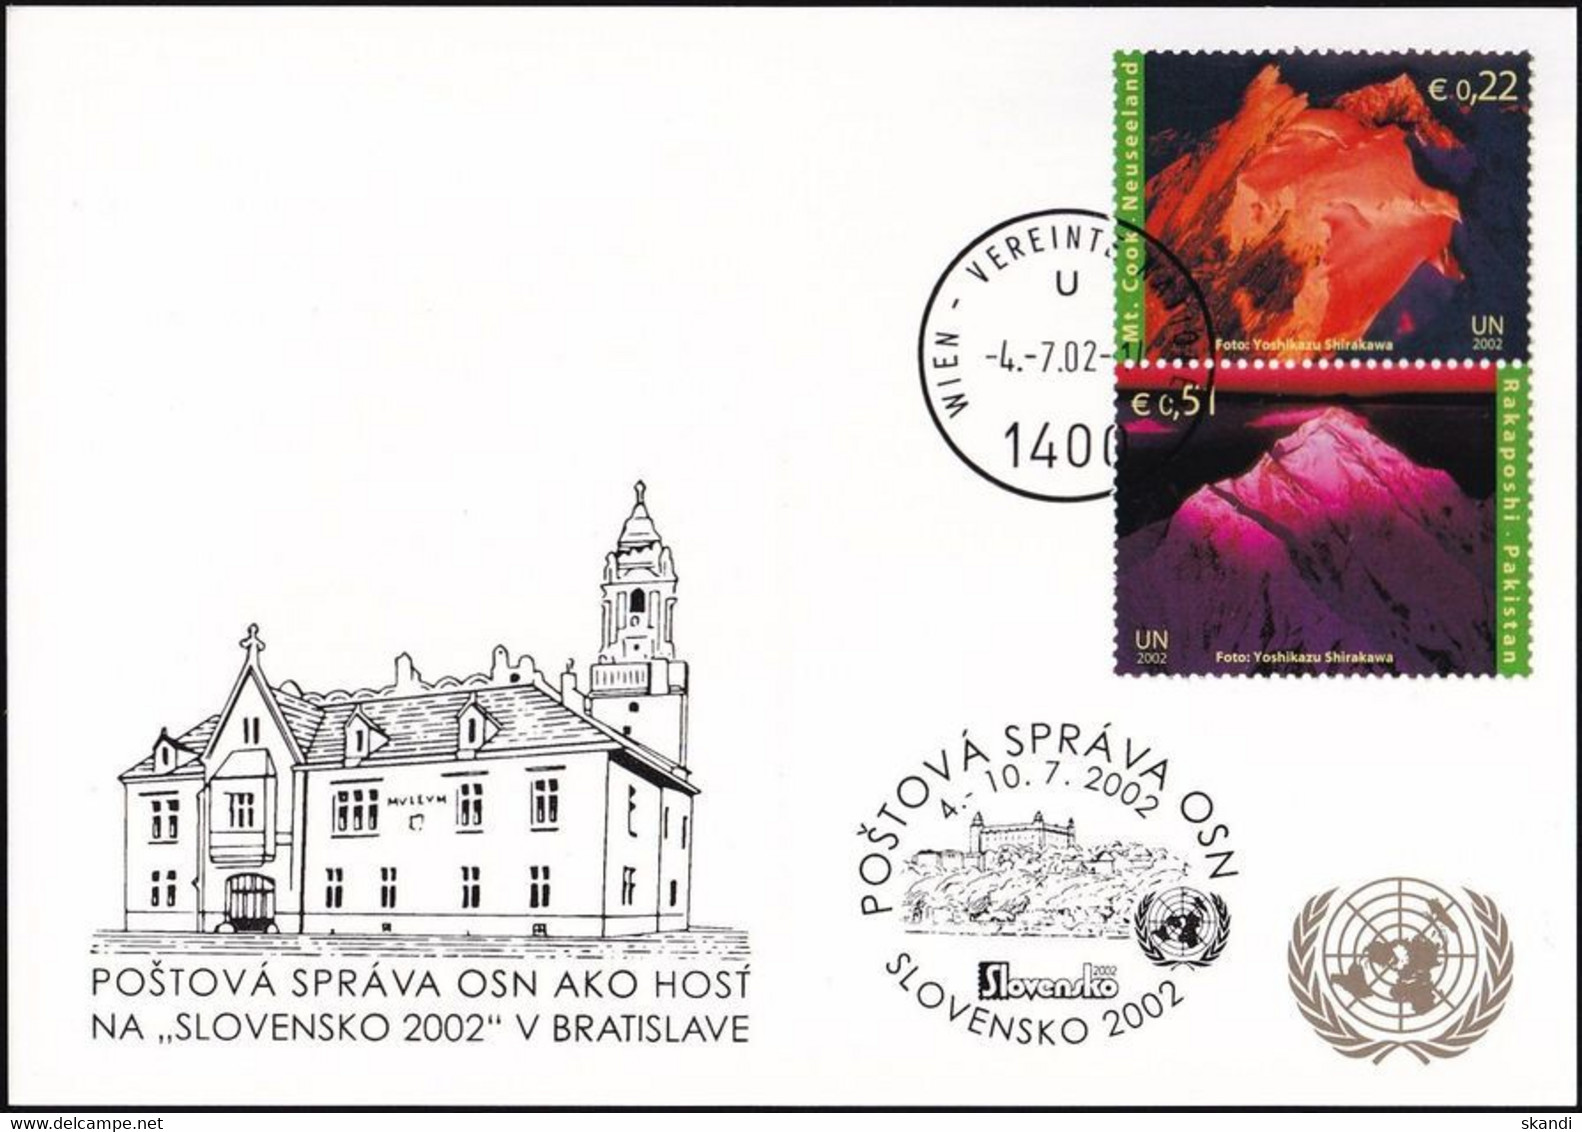 UNO WIEN 2002 Mi-Nr. 242 WEISSE KARTE - SLOVENSKO BRATISLAVA 04.07.2002 - Covers & Documents